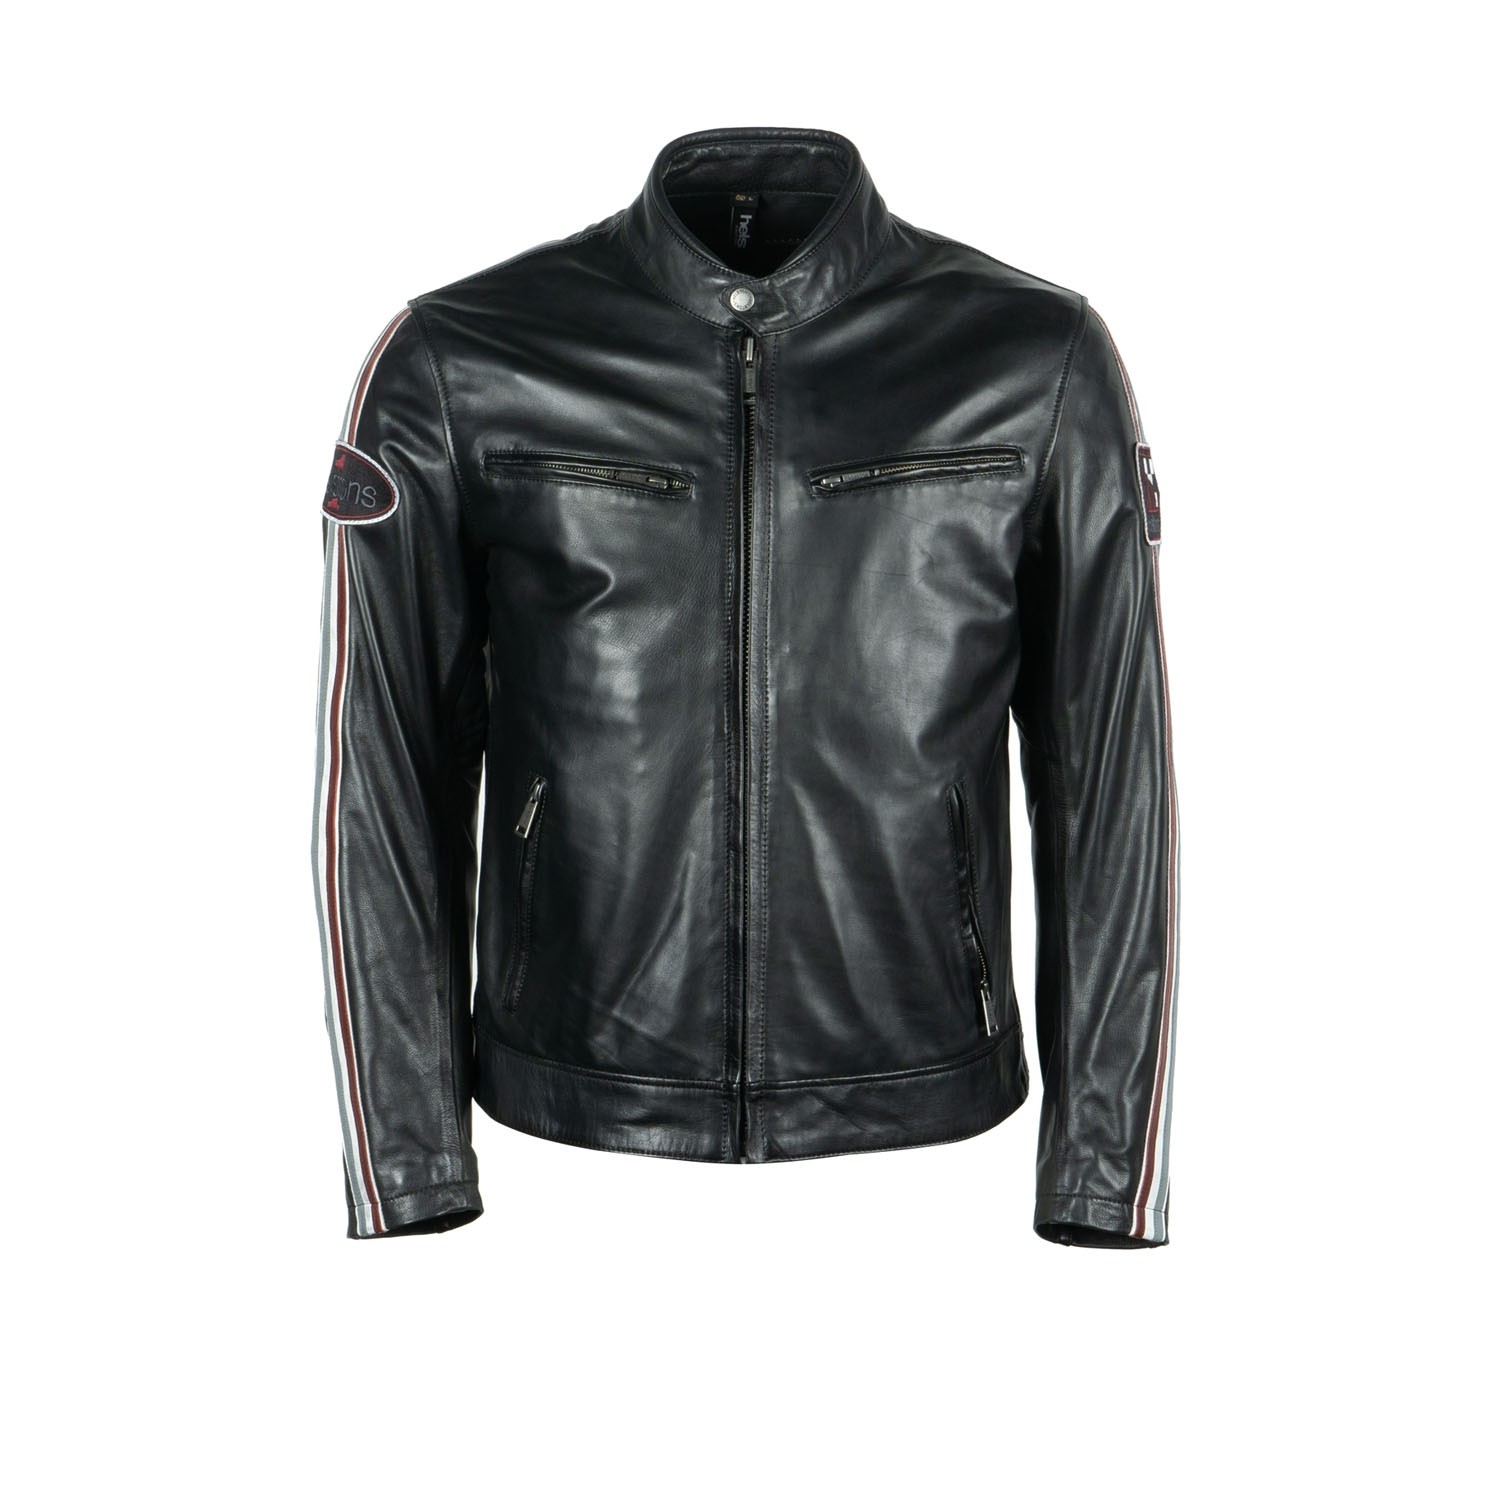 Image of Helstons Race Leather Aniline Jacket Black Size M EN